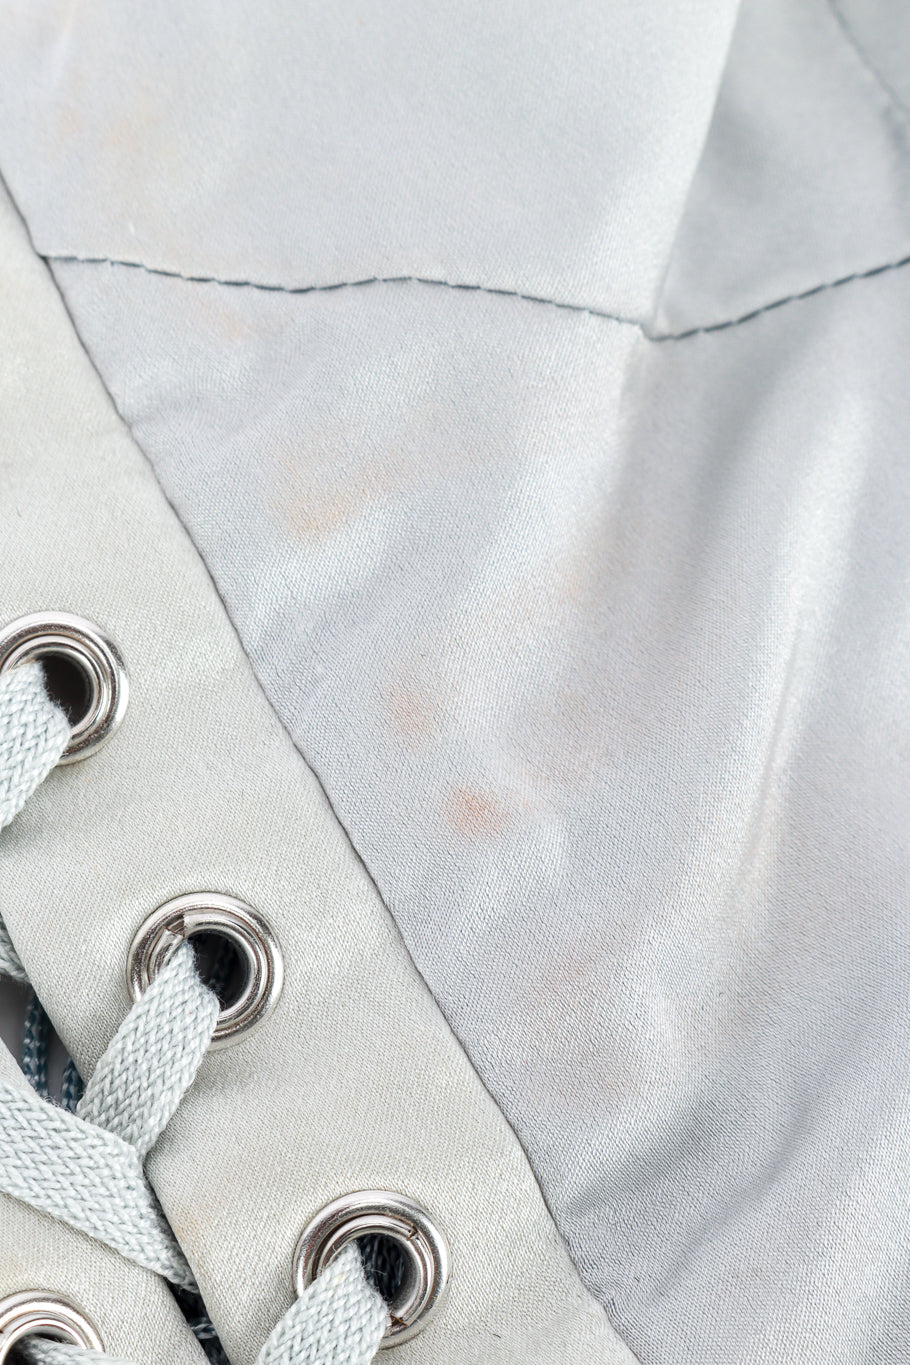 Dolce & Gabbana Fringe Fishnet Corset Top stain detail @RECESS LA